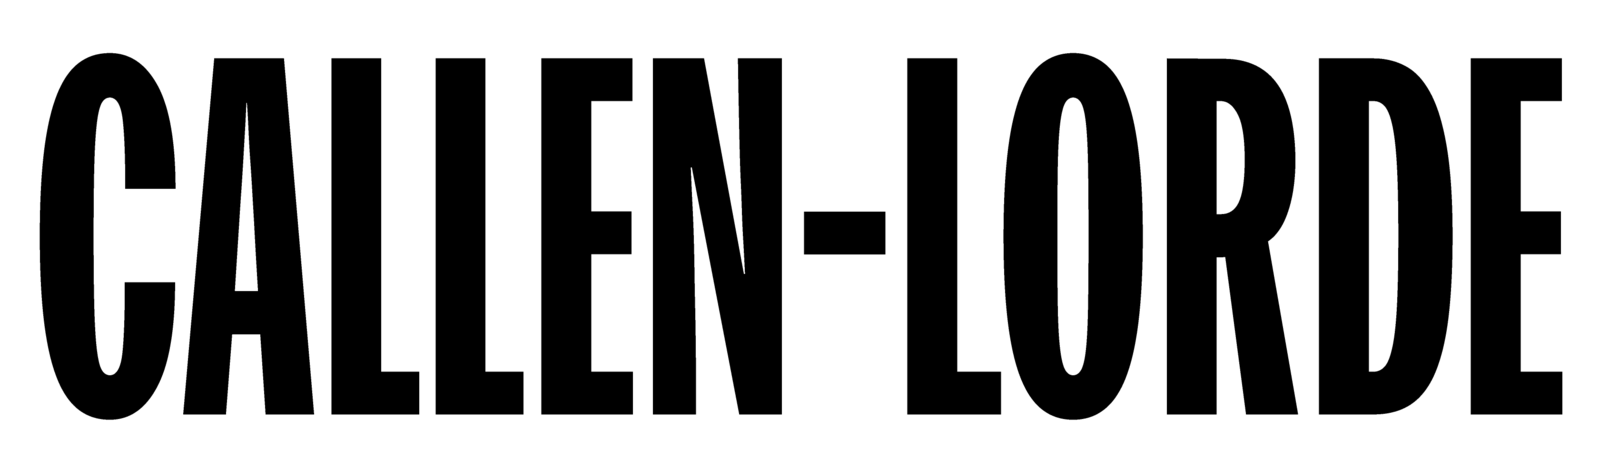 Callen - Lorde Community Health Center Logo